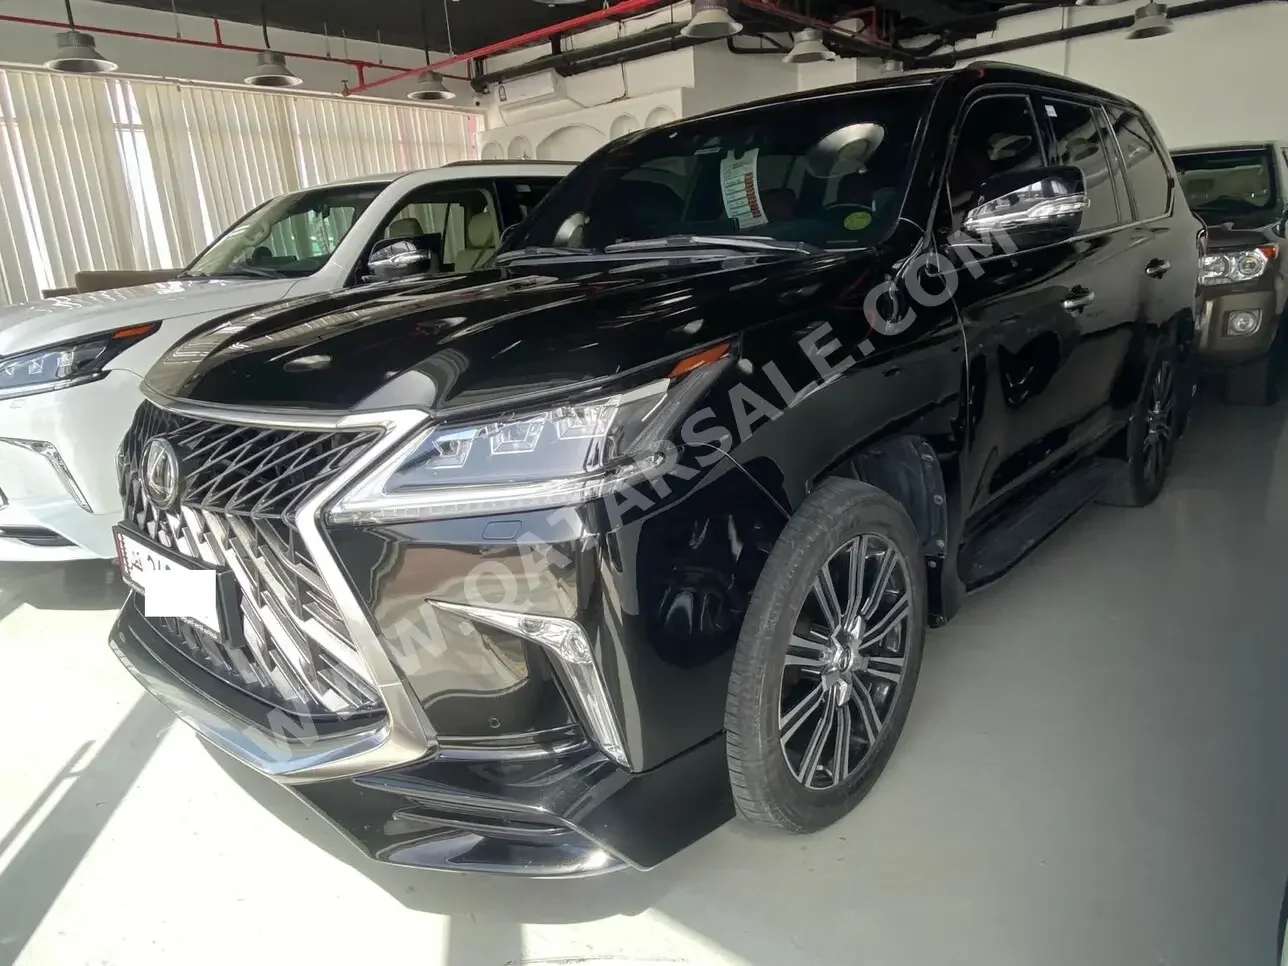 Lexus  LX  570  2018  Automatic  112,000 Km  8 Cylinder  Four Wheel Drive (4WD)  SUV  Black